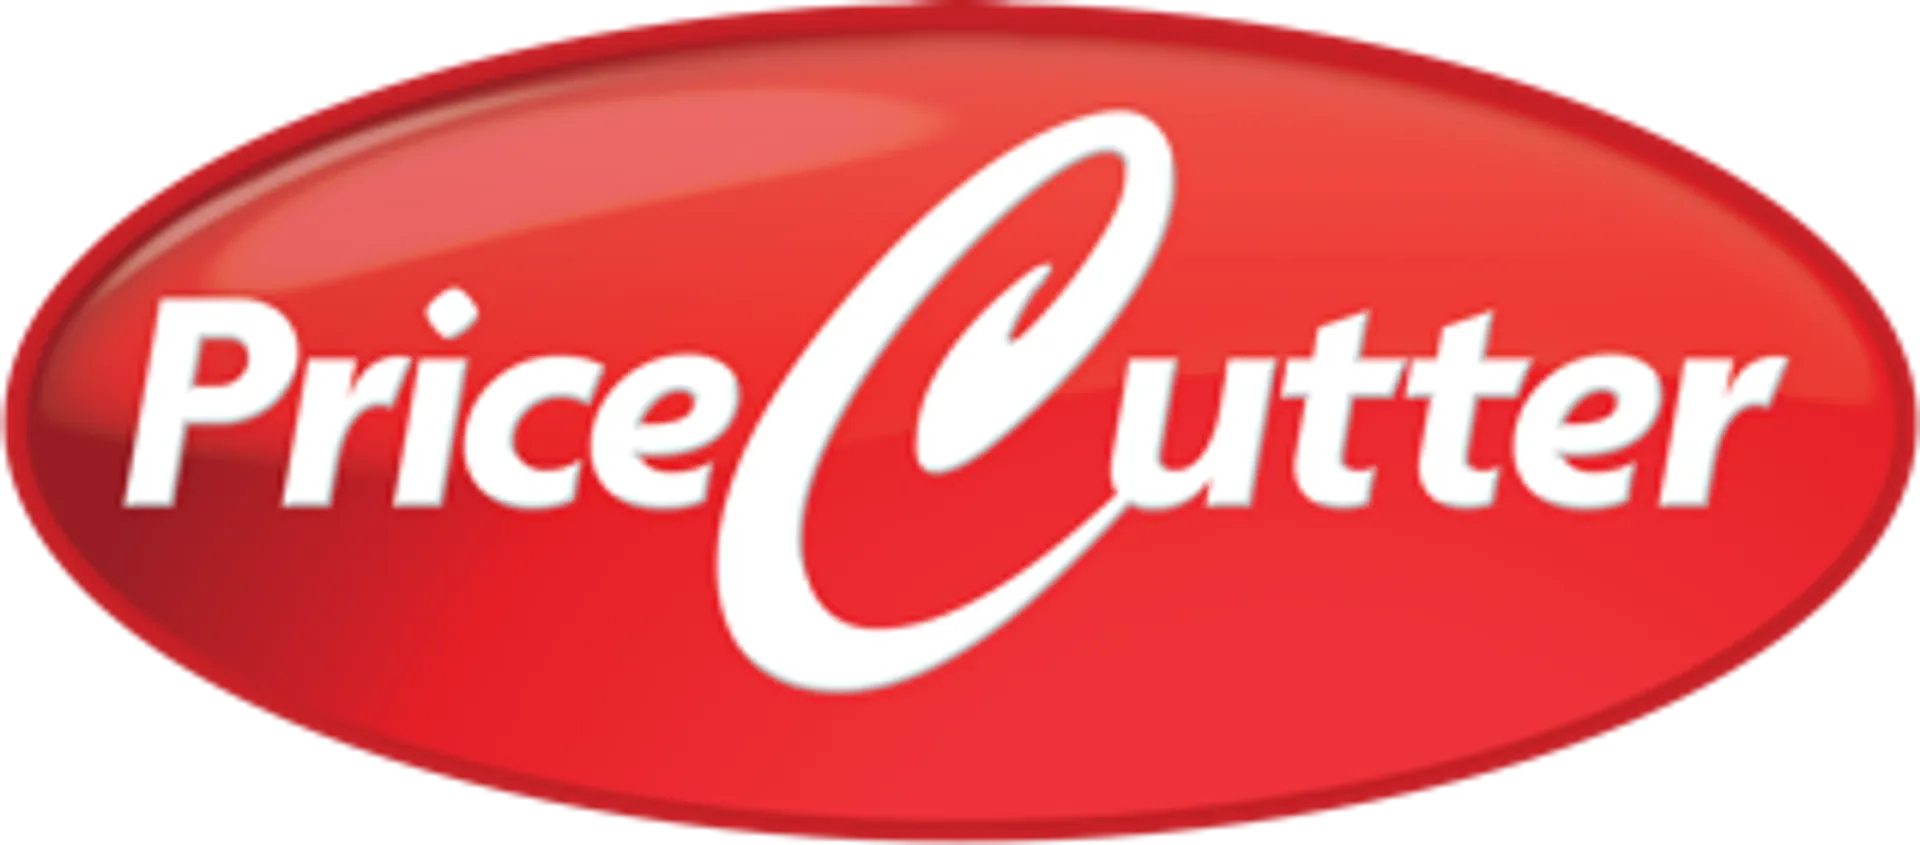 PRICE CUTTER logo